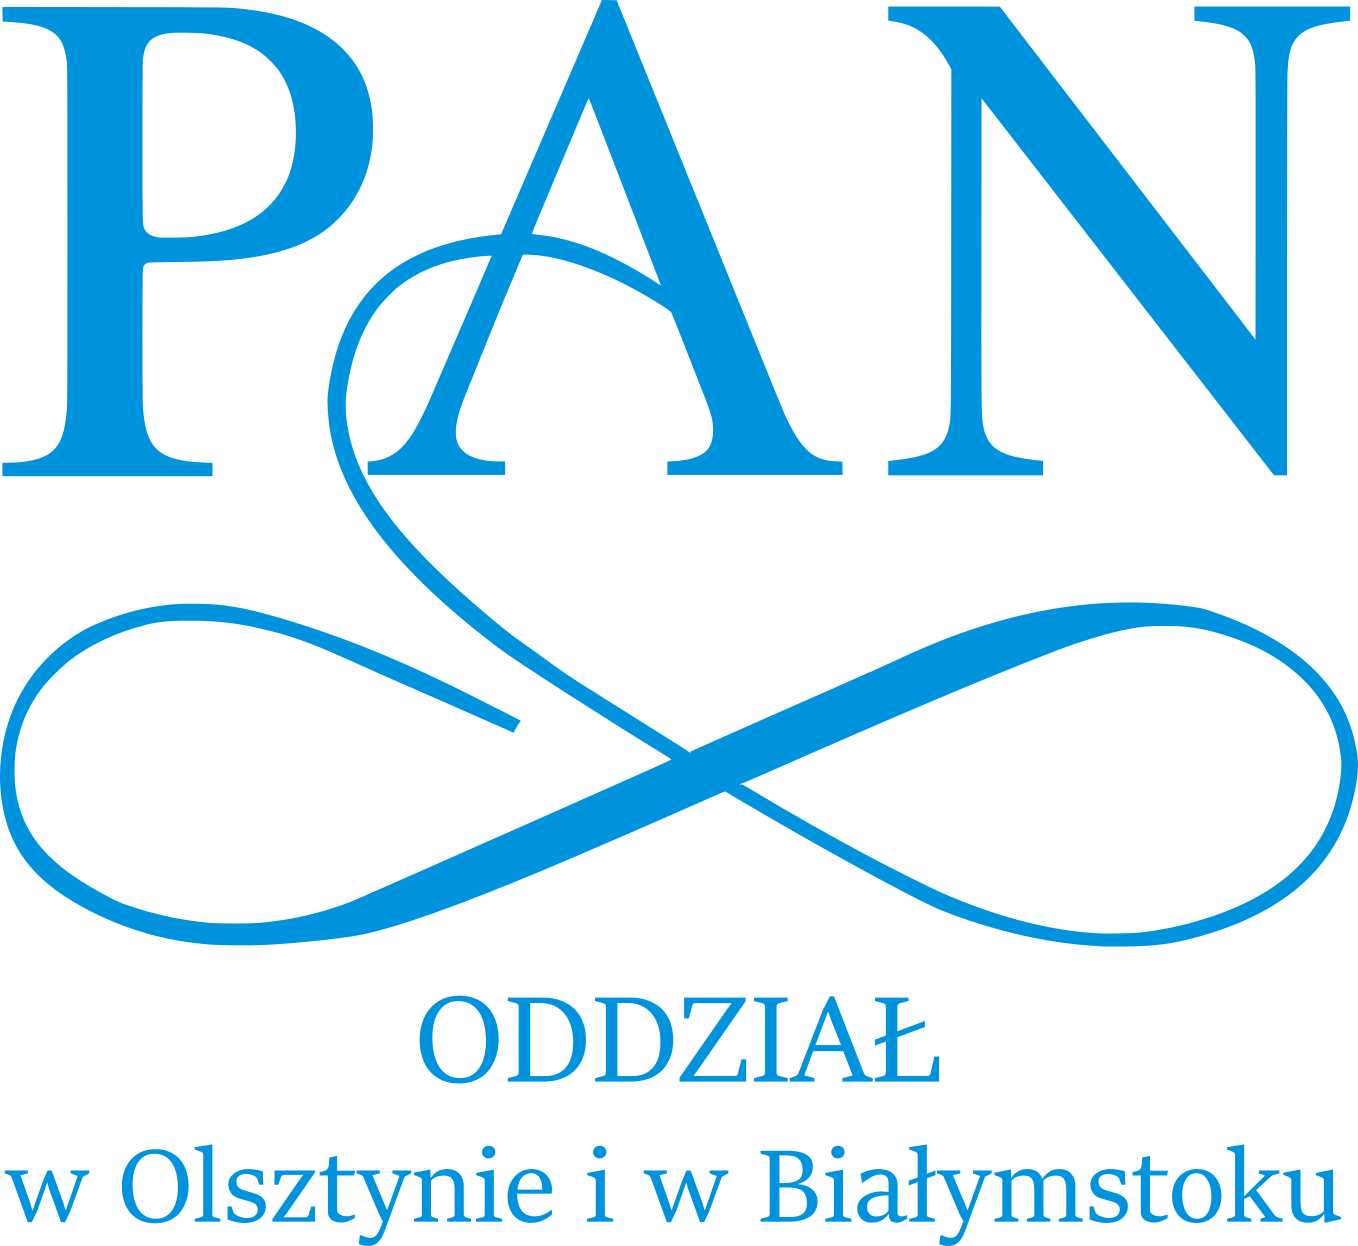 PAN OOB logo